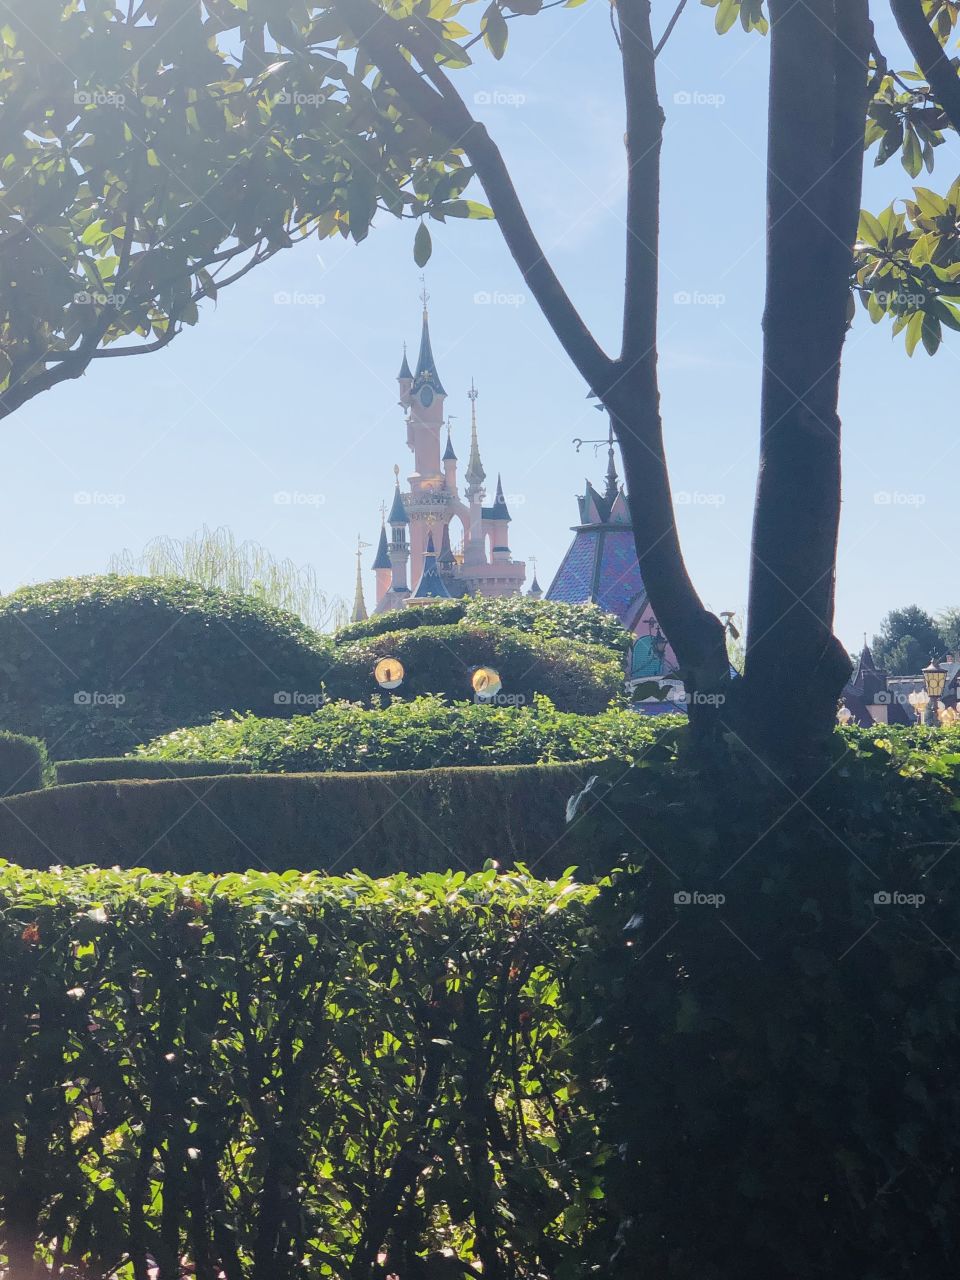 Disneyland Paris castle of sleeping beauty